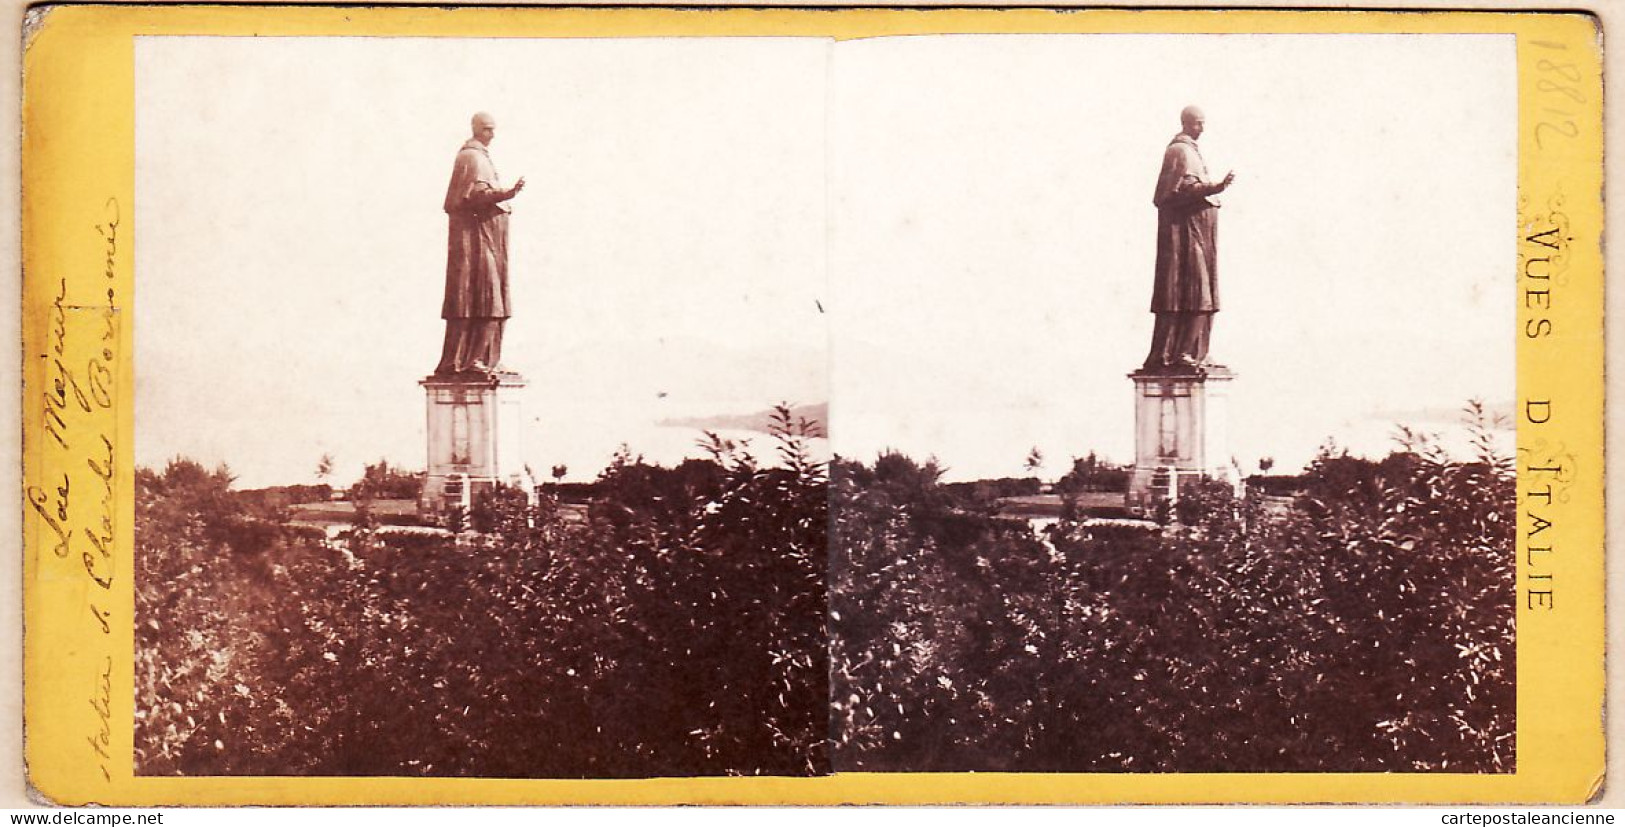 04562 / Fotografia Stereo 1865s Italia StatuaSanto LAC MAJEUR Statue De Saint-Charles-BORROMEE Sancarlone Vues Italie - Stereoscopic